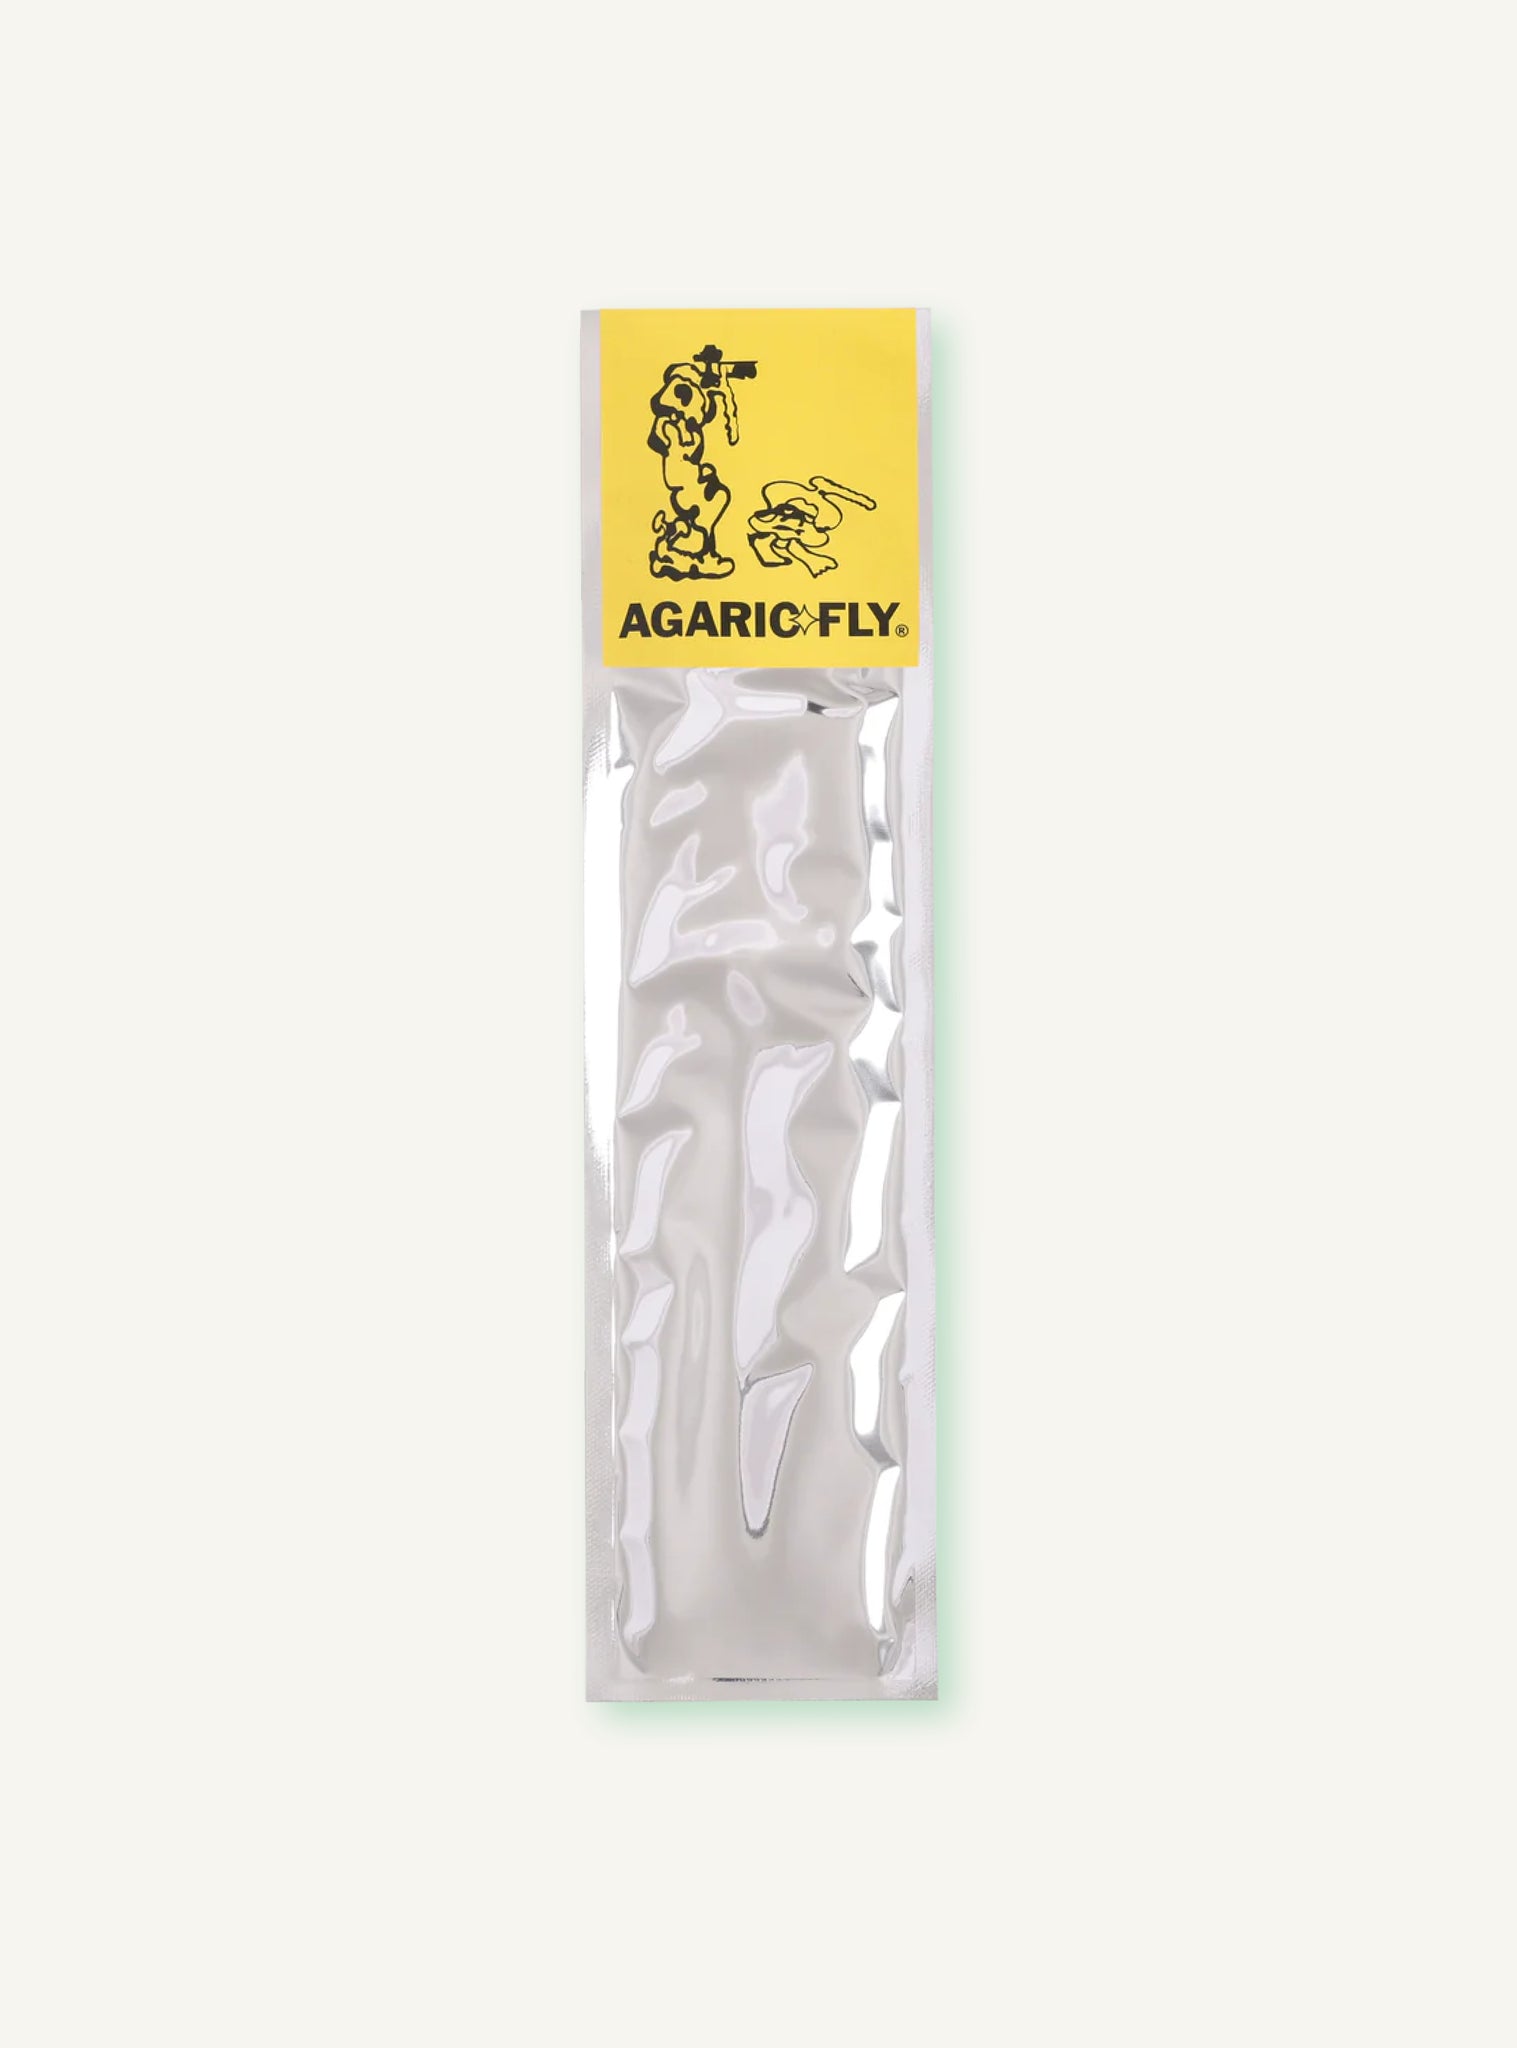 READING ENVIRONMENT ENHANCER: Agaric Fly Incense